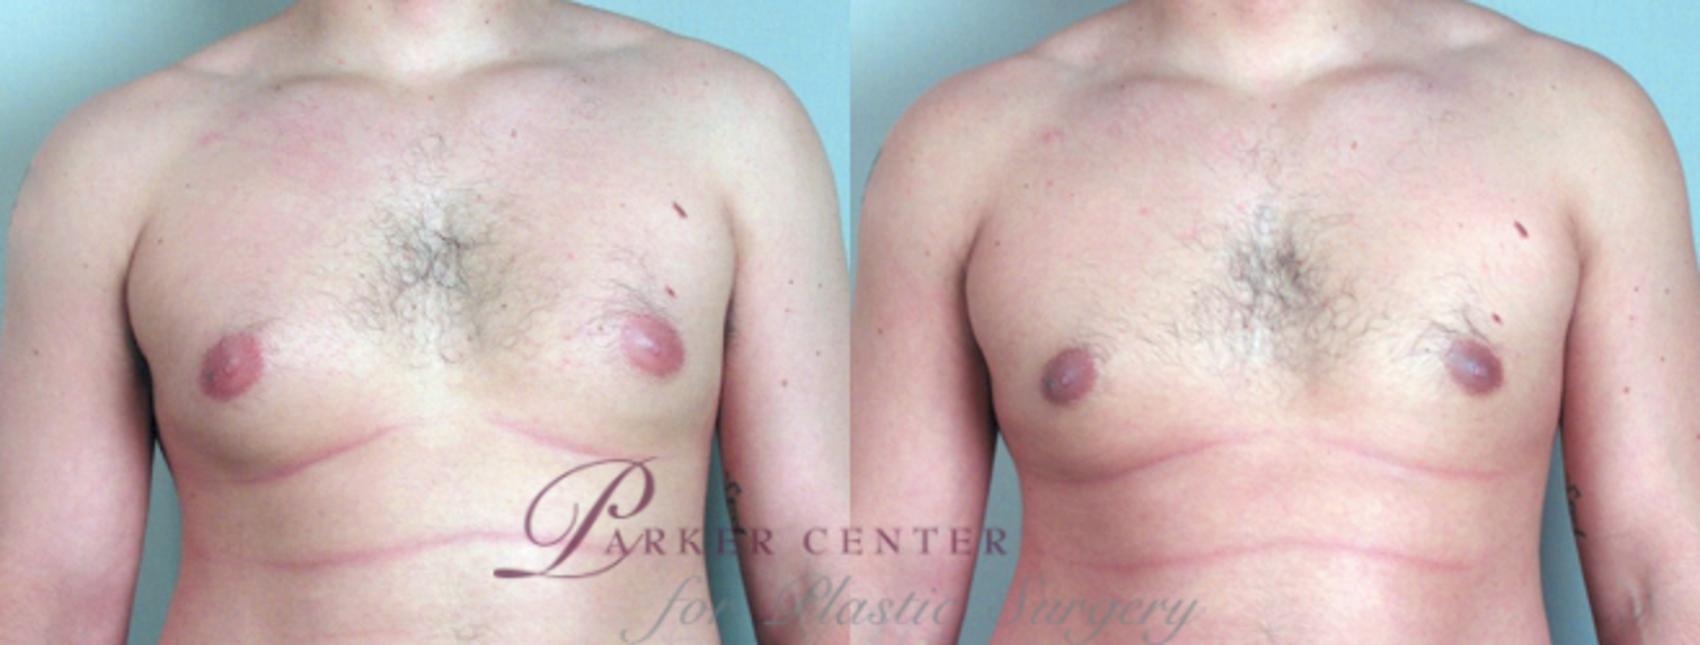 Gynecomastia Surgery Case 617 Before & After View #1 | Paramus, NJ | Parker Center for Plastic Surgery